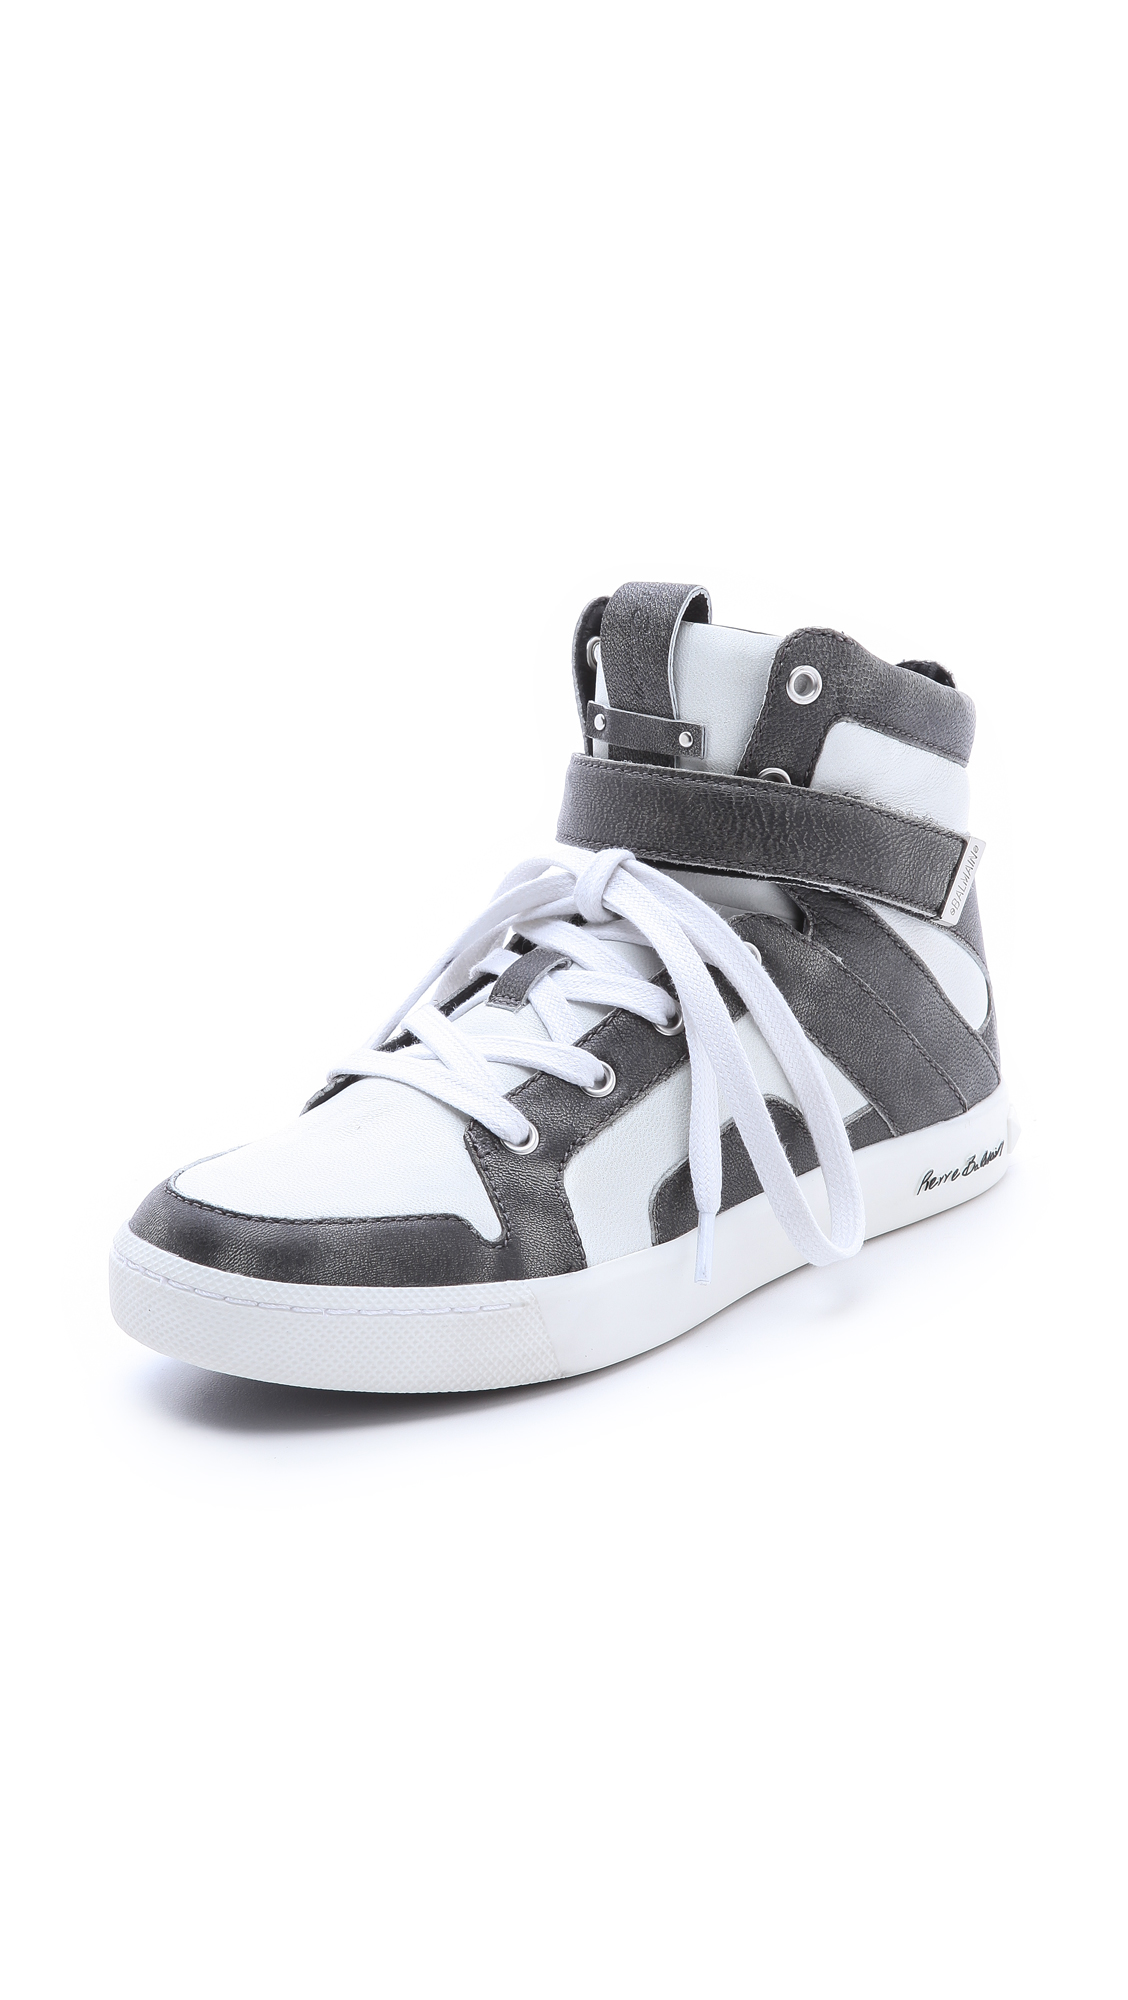 Pierre Balmain Austin High Top Sneakers in Gray (black) | Lyst